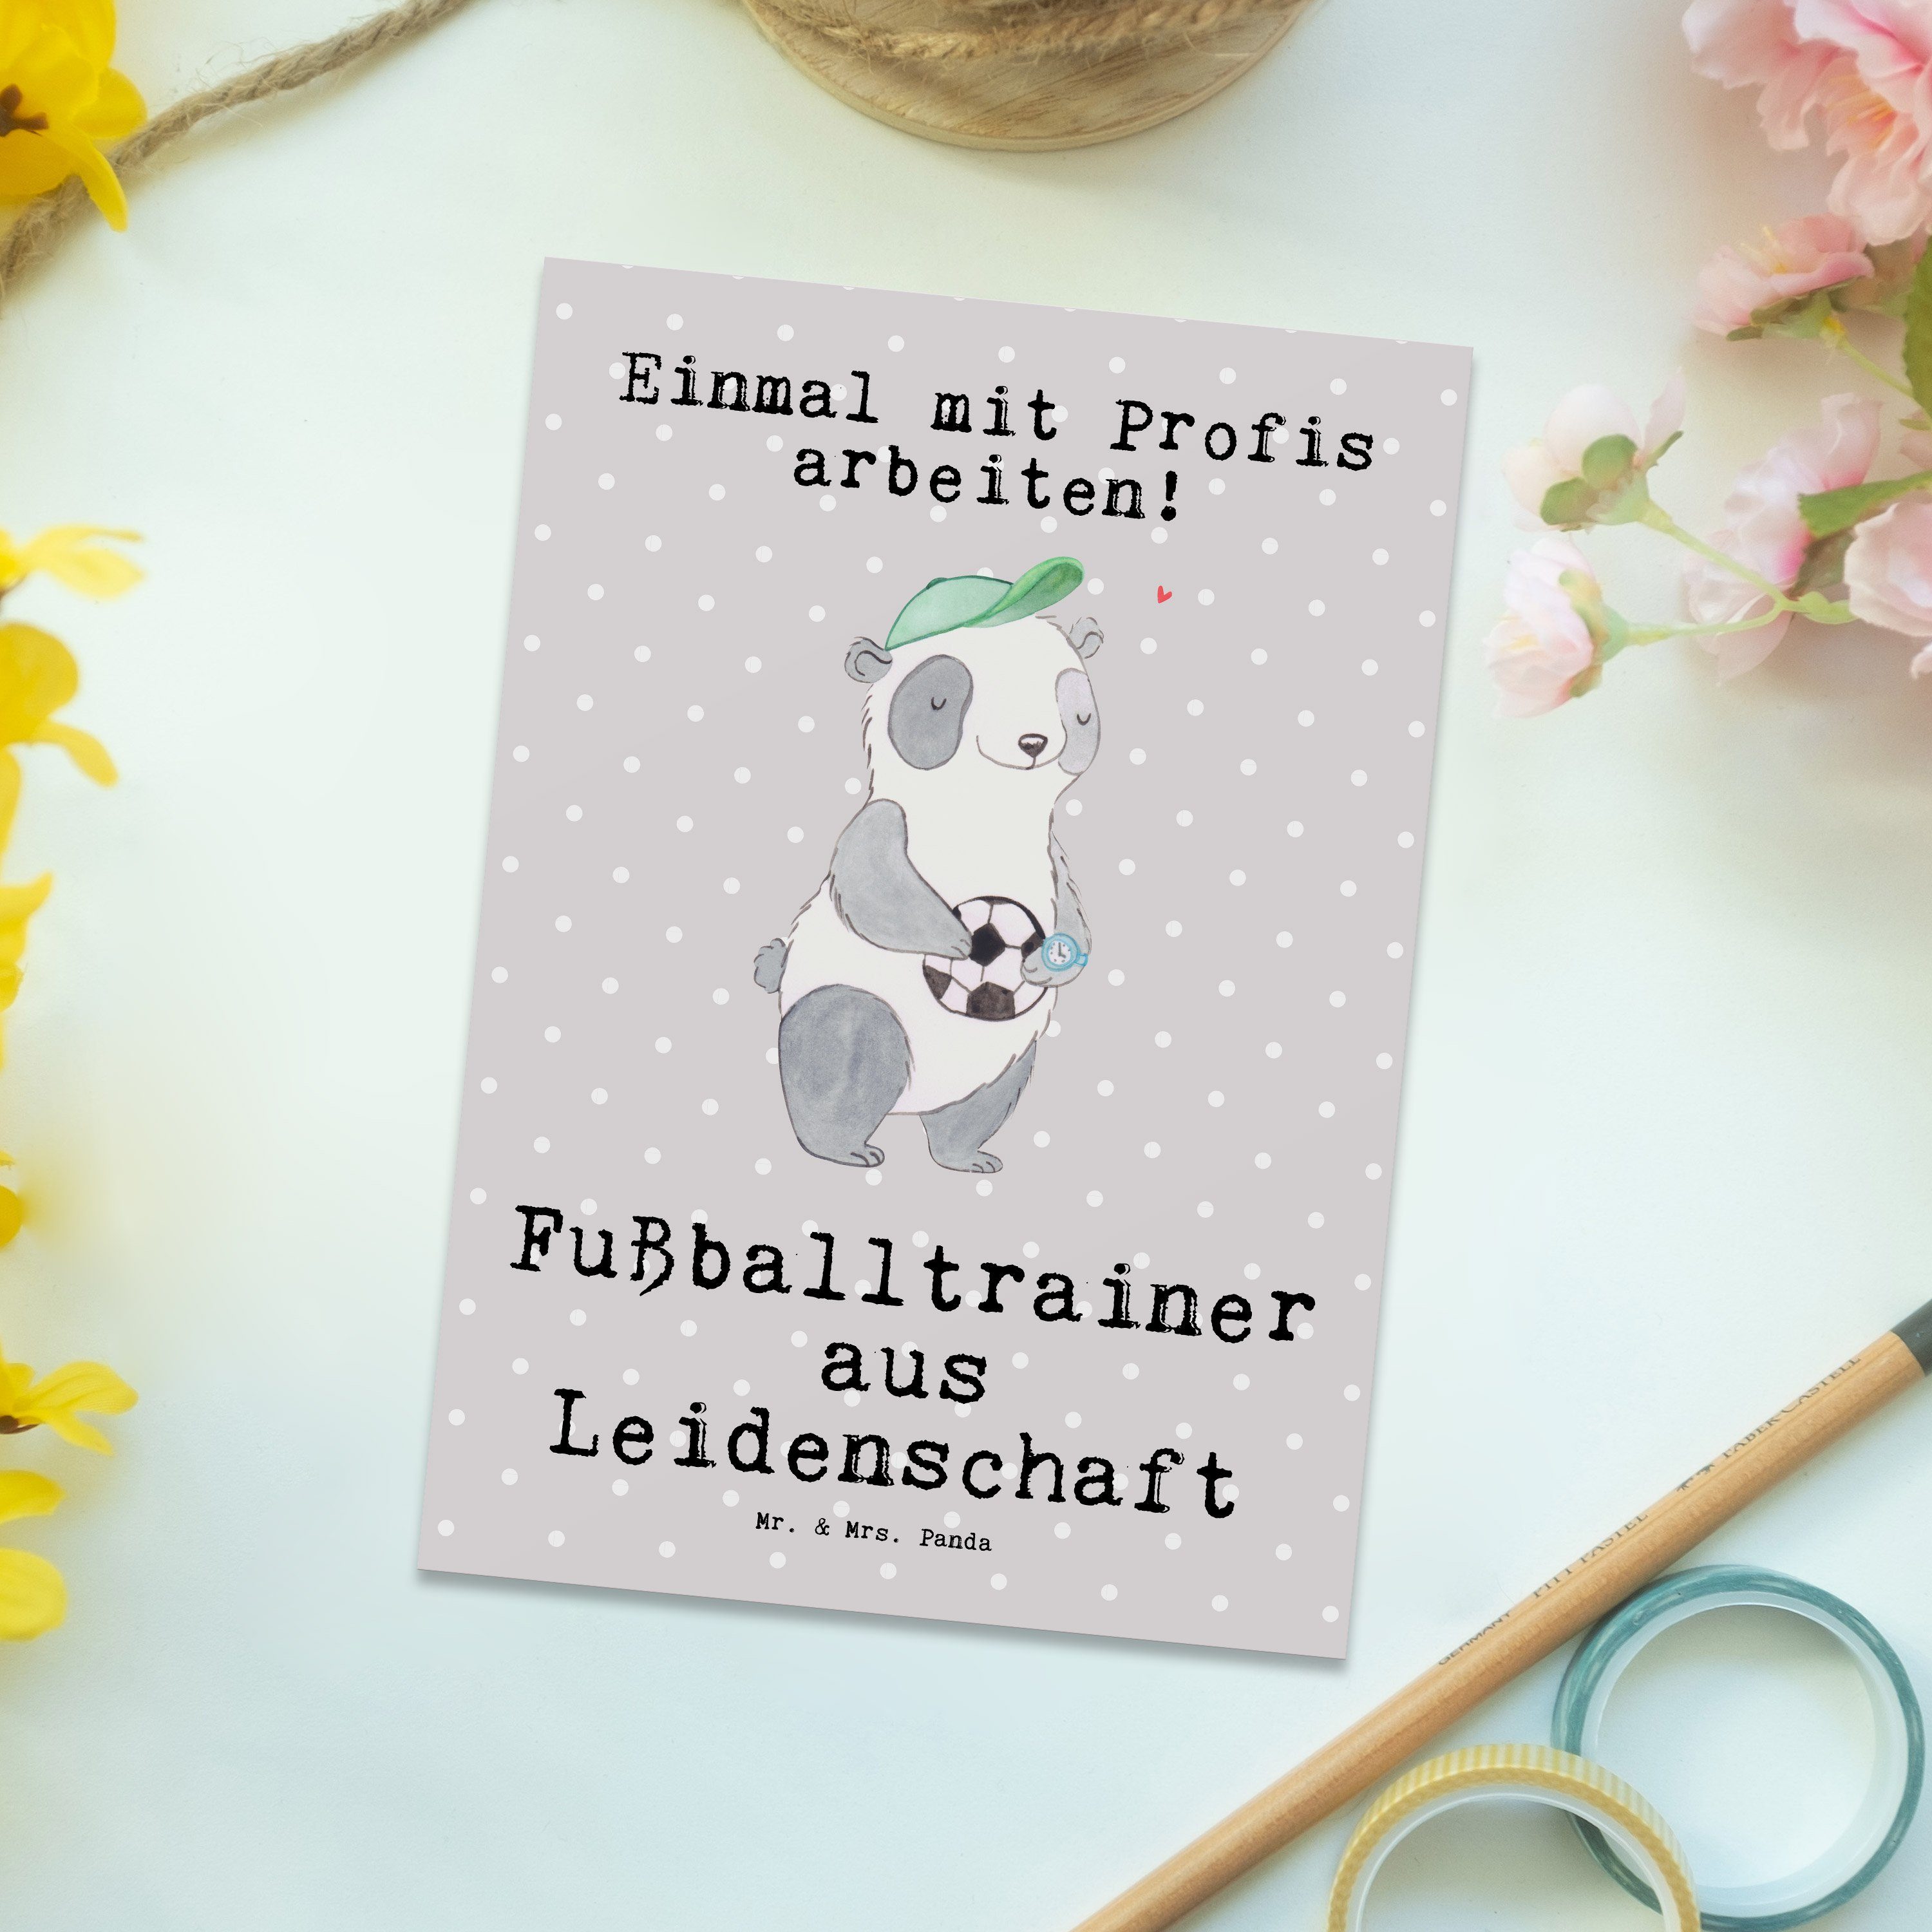 Mr. & Mrs. Panda aus - Pastell - Grau Geschenk, Leidenschaft Fußballtrainer Postkarte Dankeskart